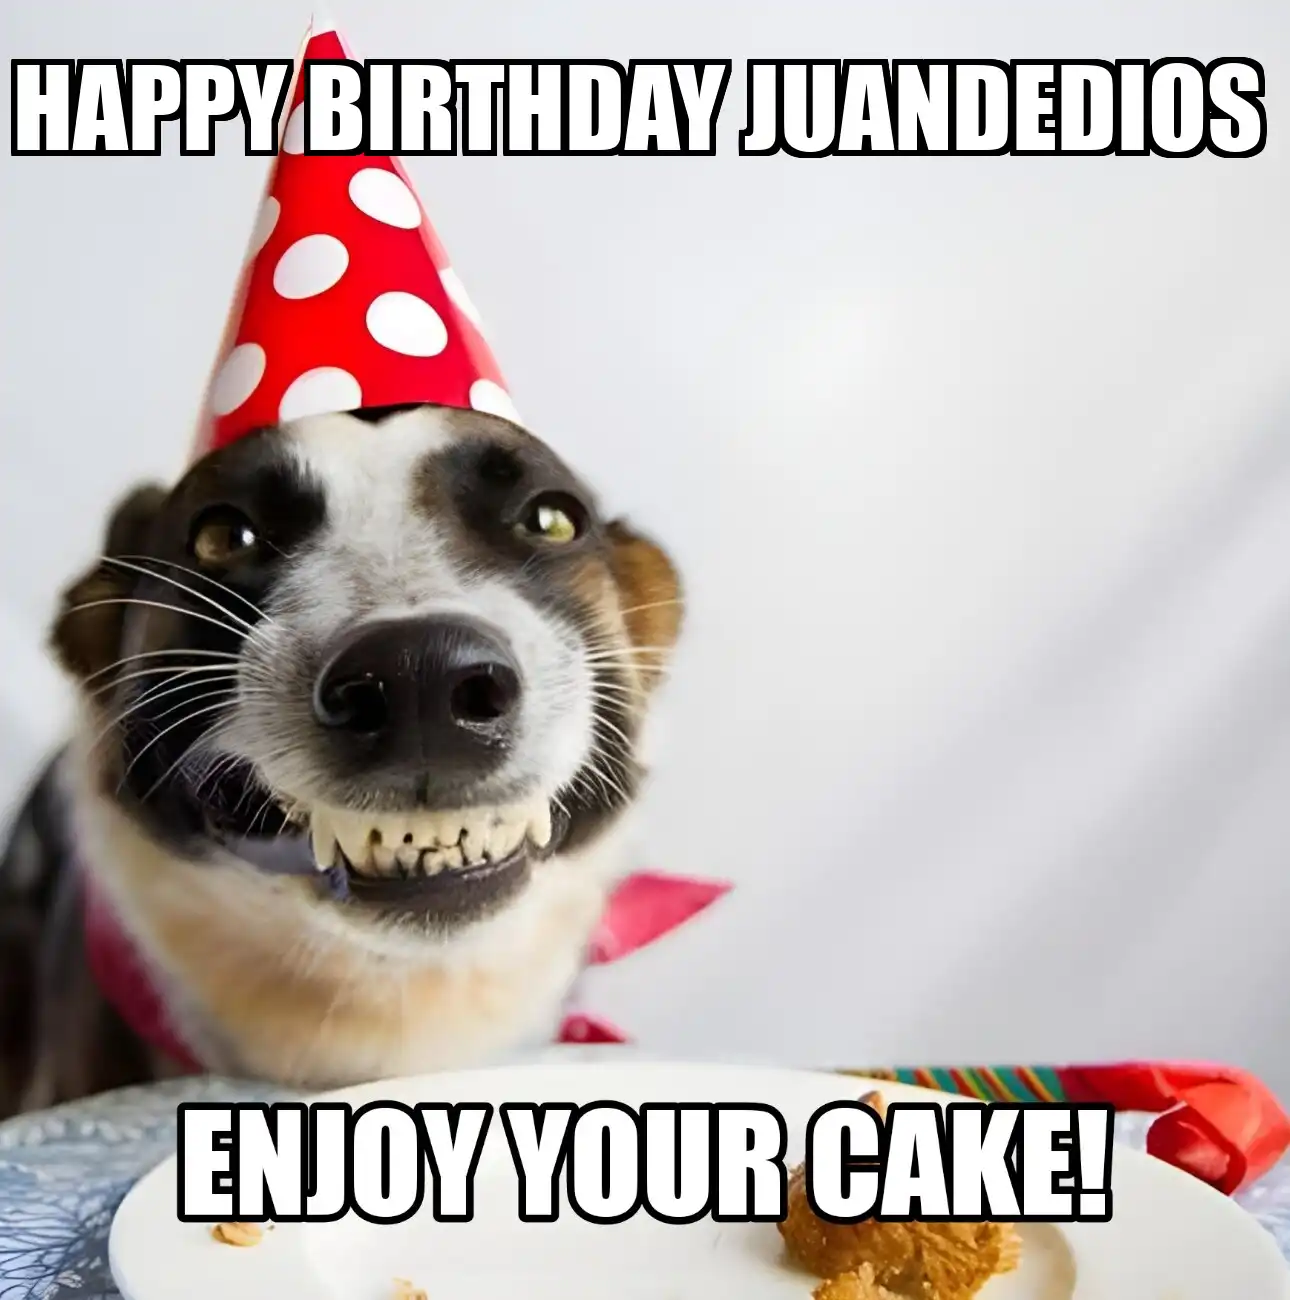 Happy Birthday Juandedios Enjoy Your Cake Dog Meme